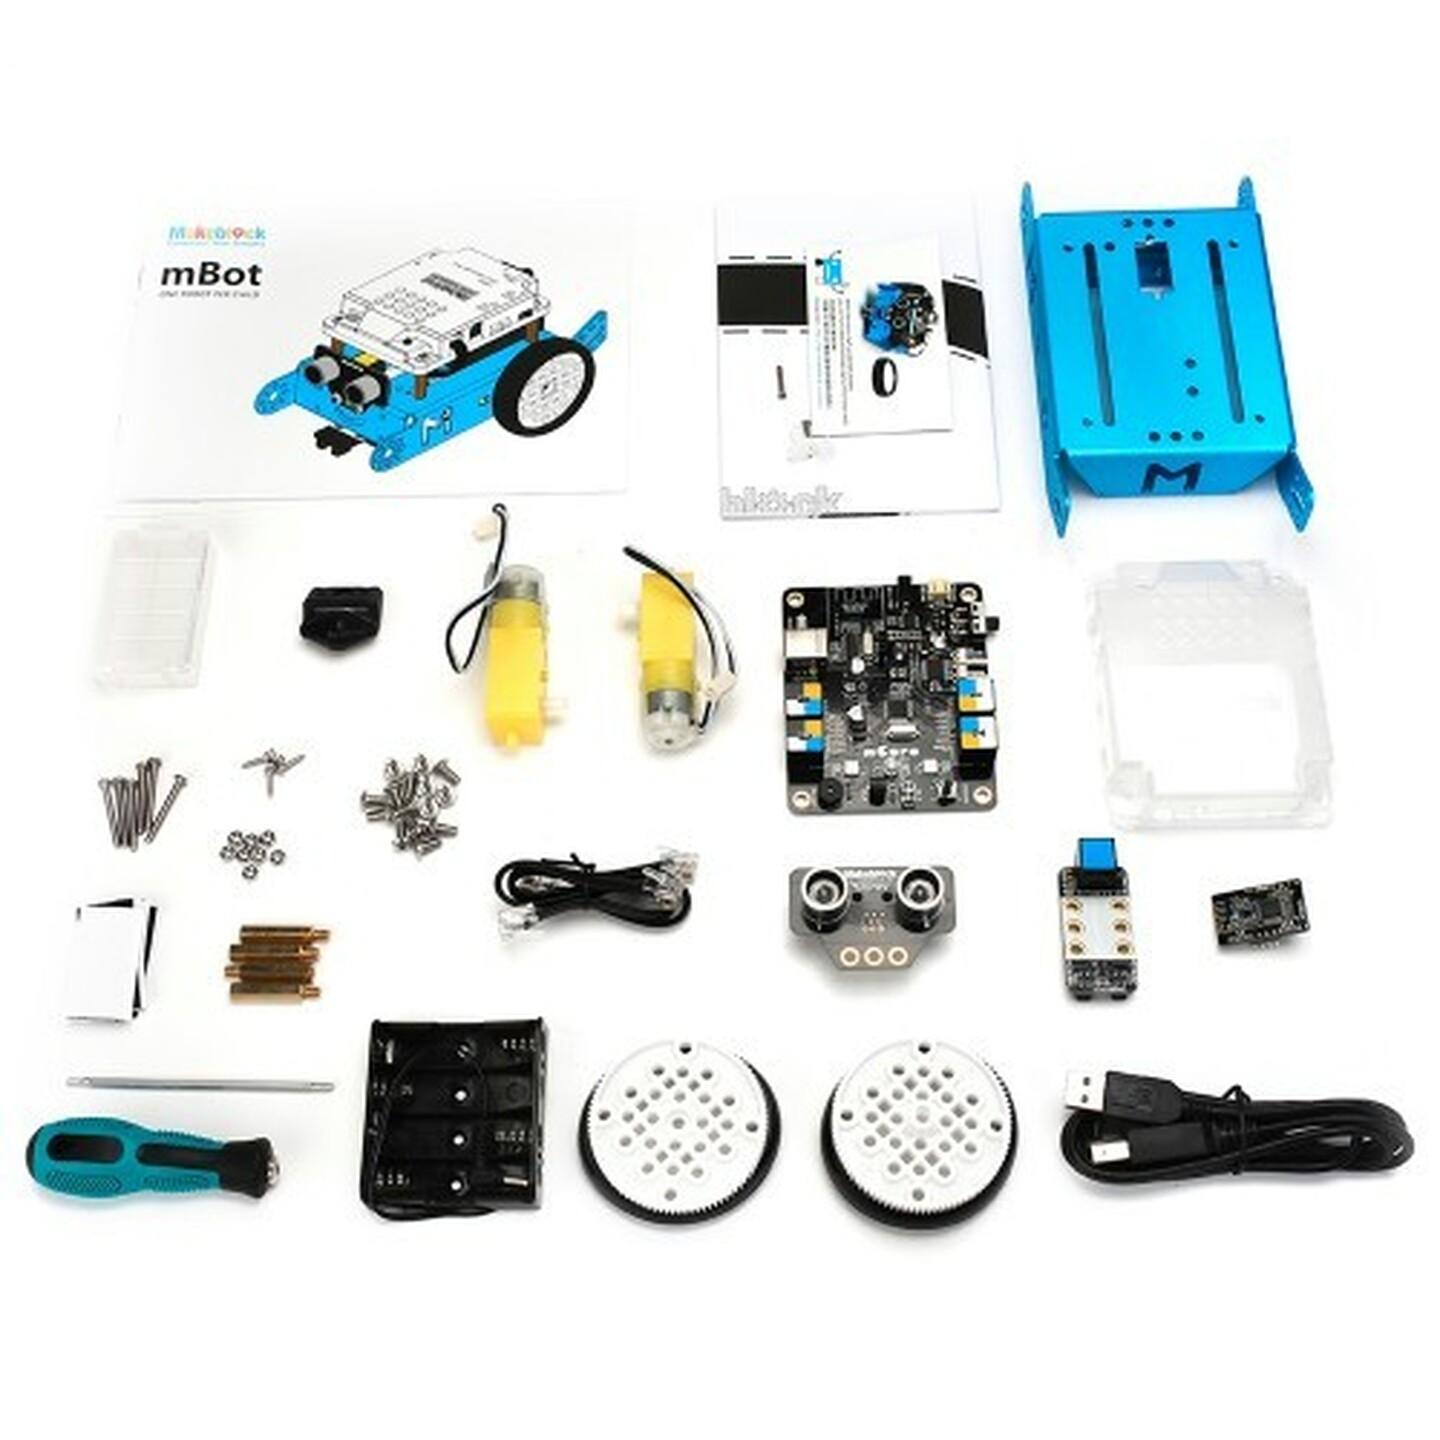 Makeblock mBot Blue Robot Kit